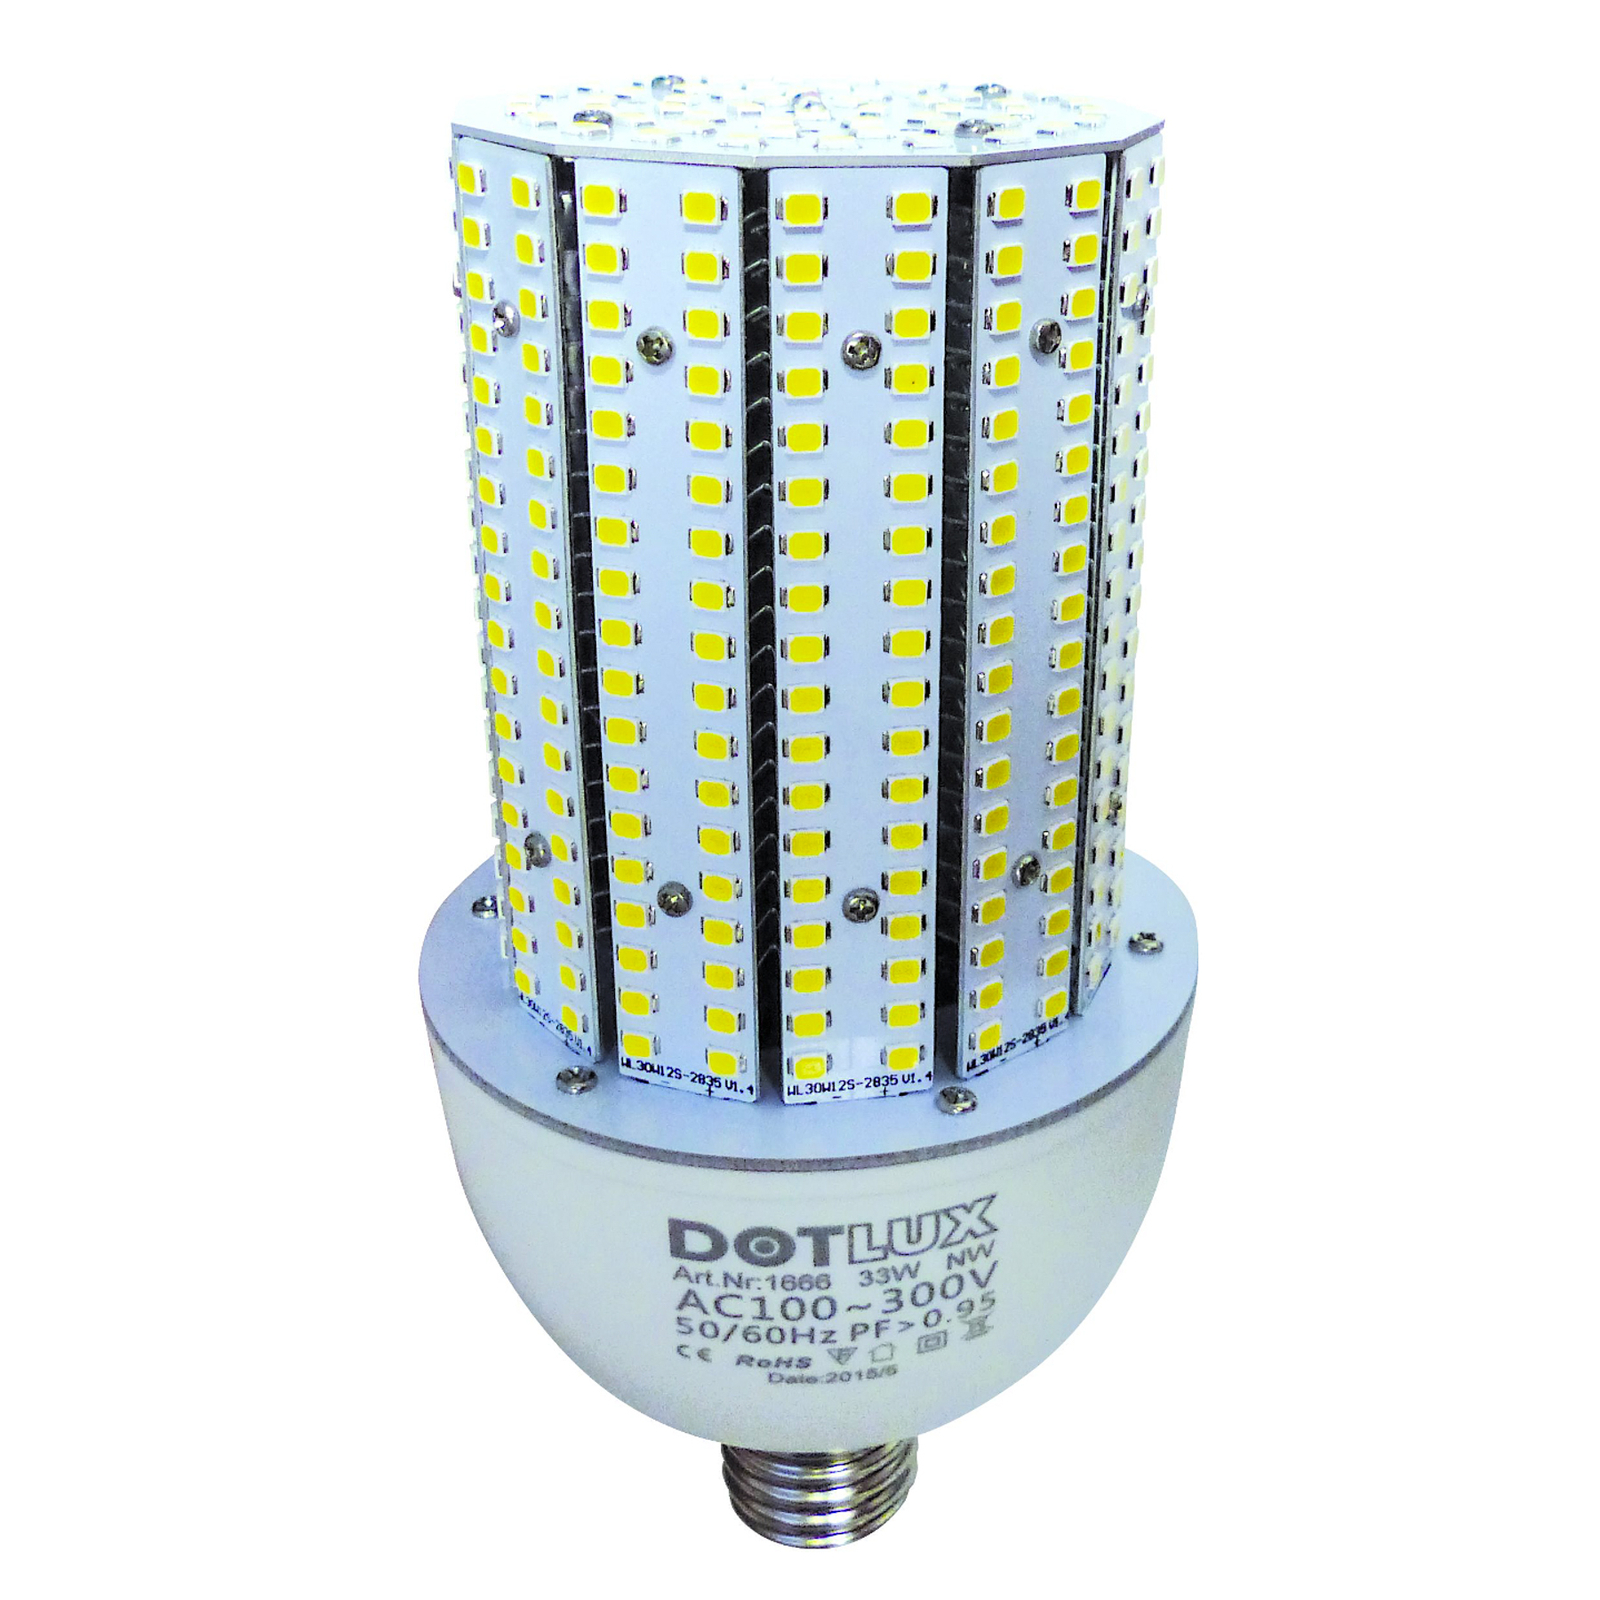 DOTLUX RETROFITnano LED-Lampe IP65 28W 4.500K